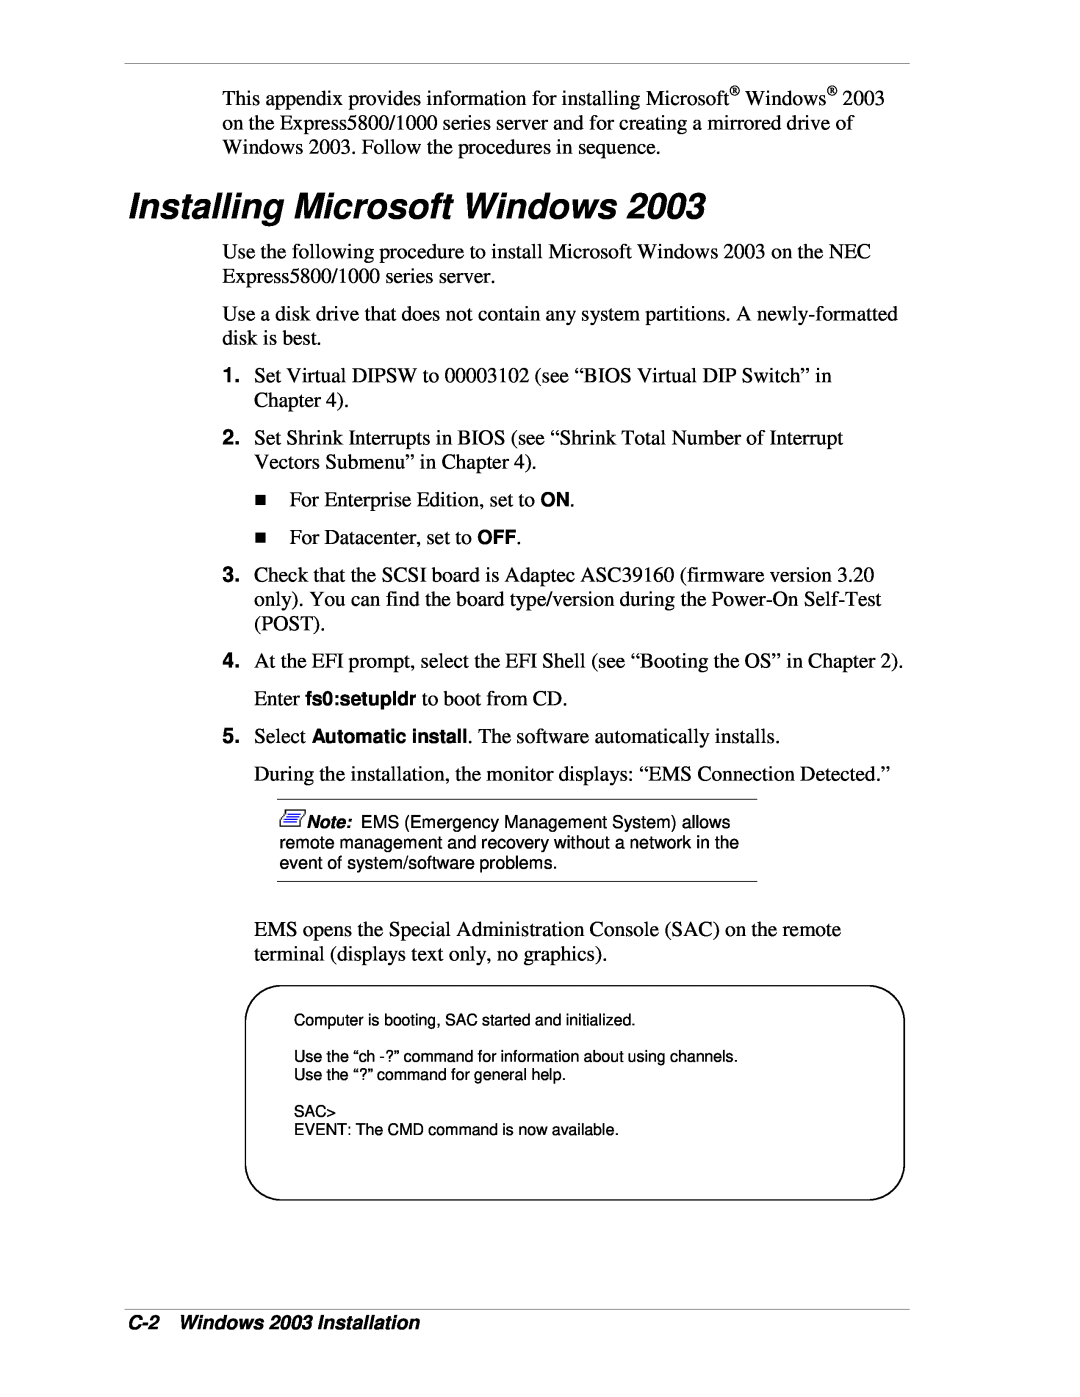 NEC 1080Xd manual Installing Microsoft Windows 